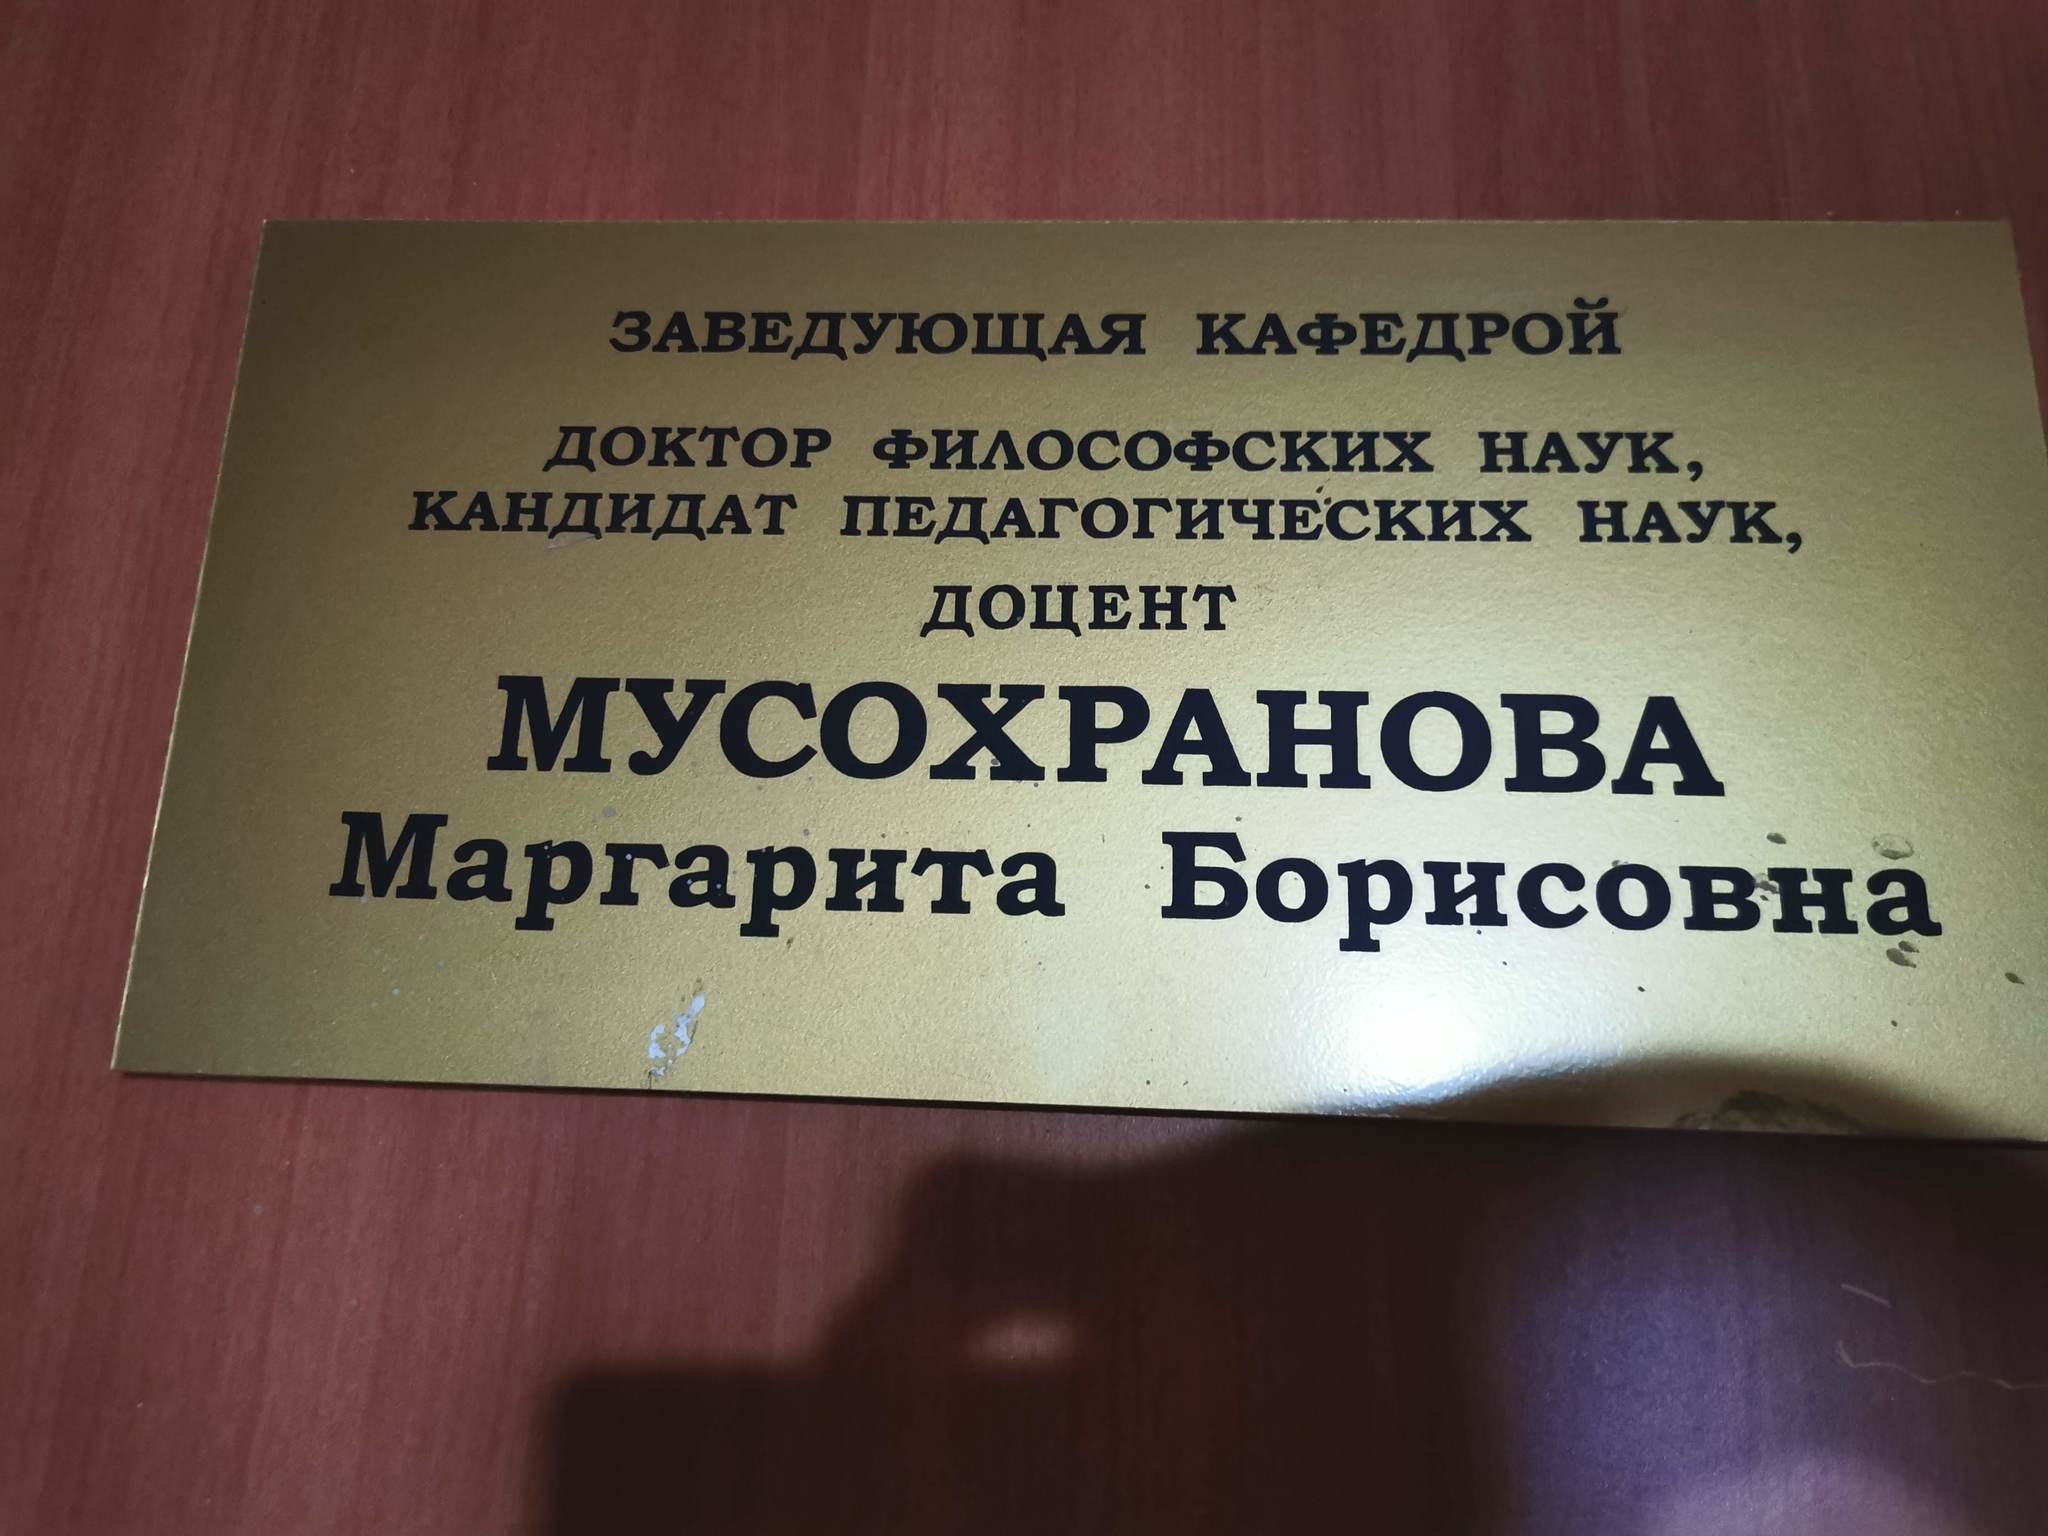 Табличка ФИО на кафедре библиотека красная